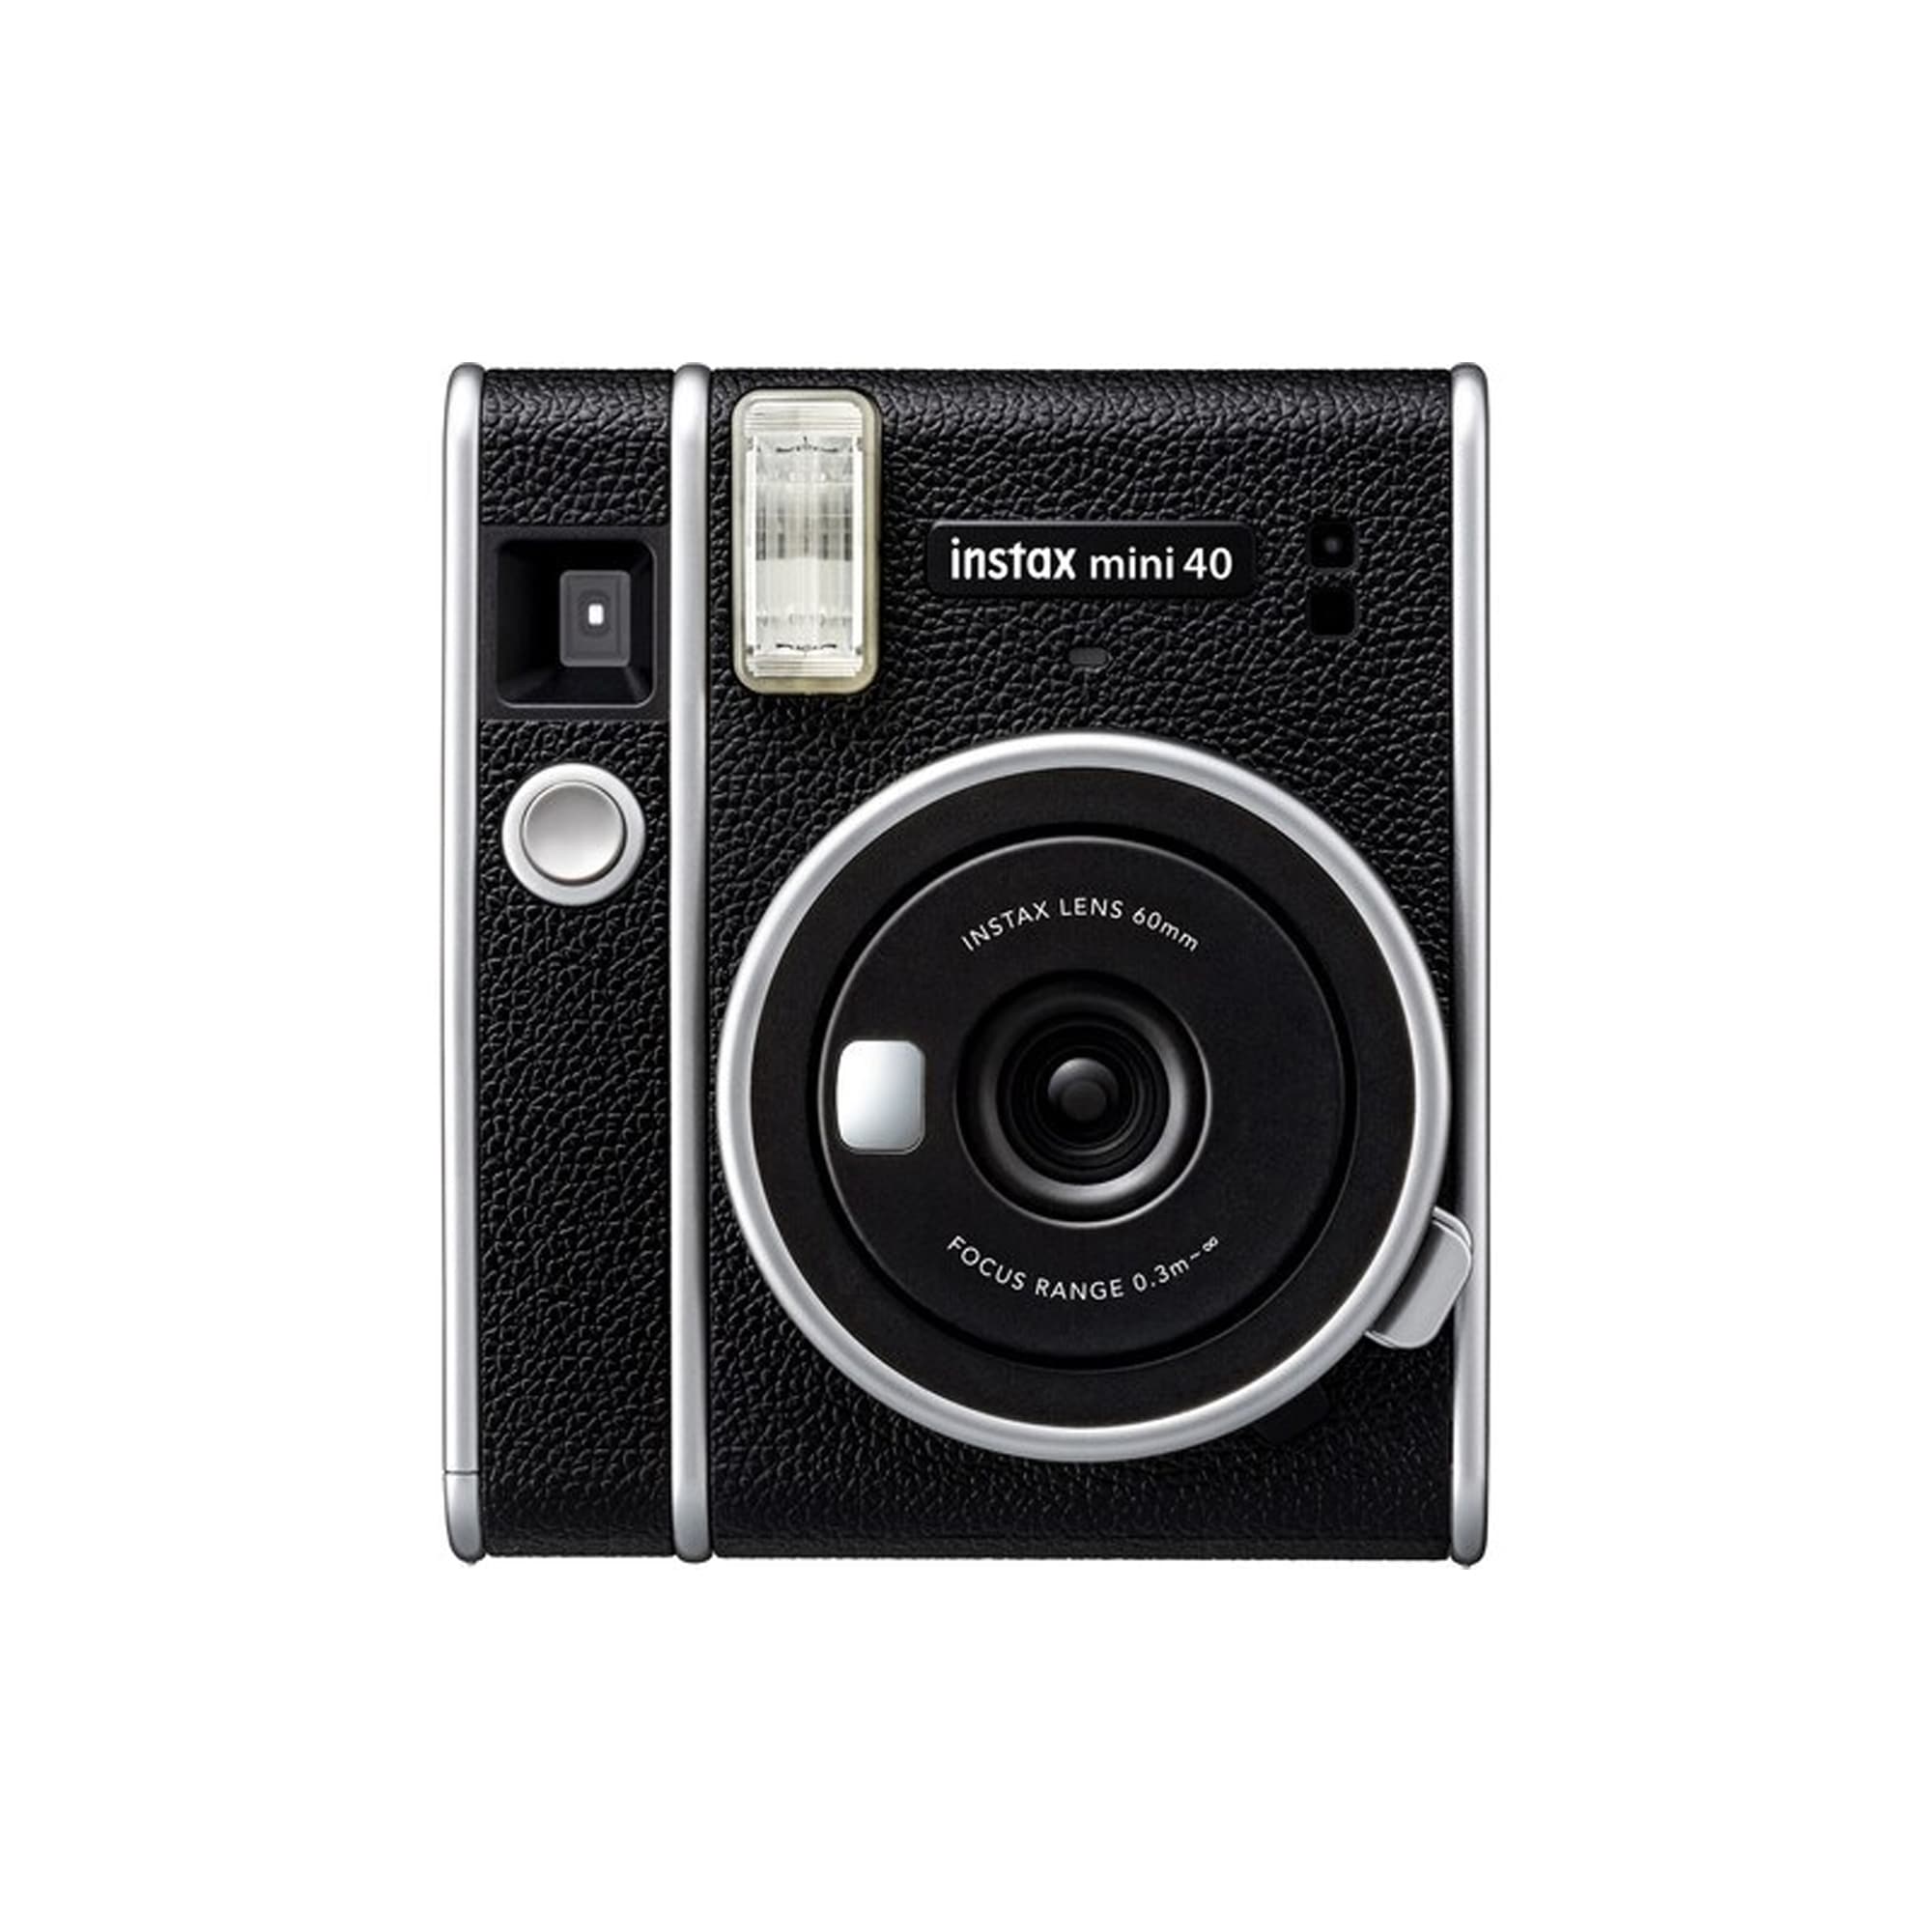  Fujifilm Instax Mini 90 Neo Classic Instant Film Camera Black  with 20 Instant Film Accessory Bundle : Electronics